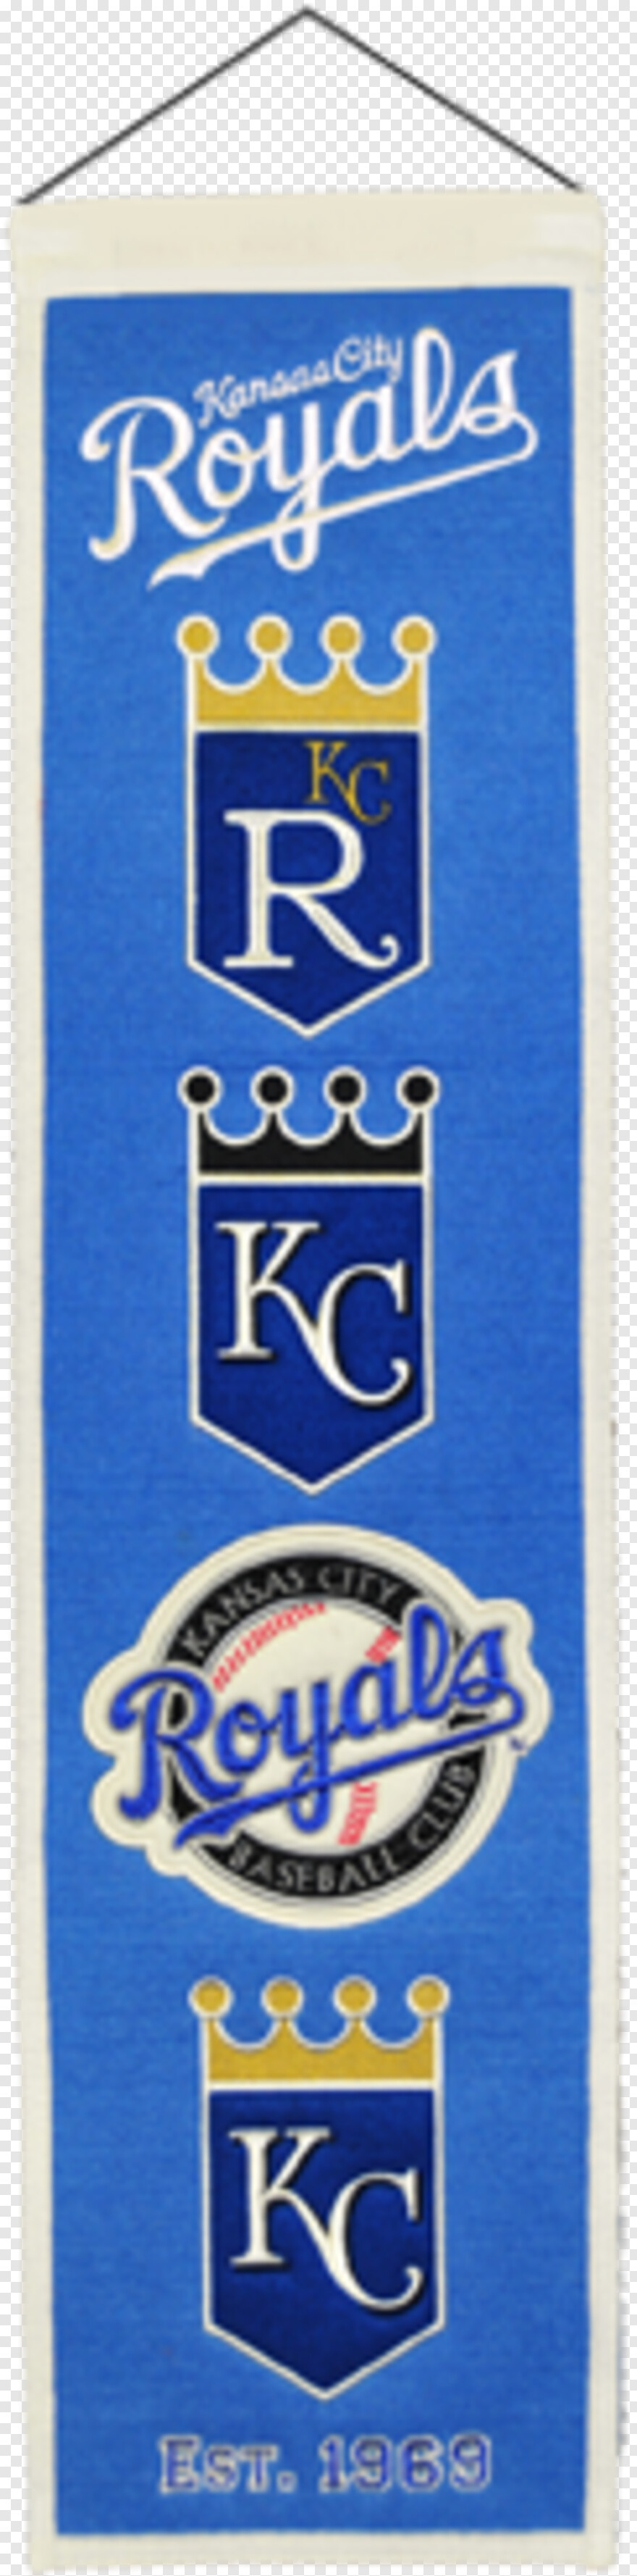 kansas-city-royals-logo # 409071